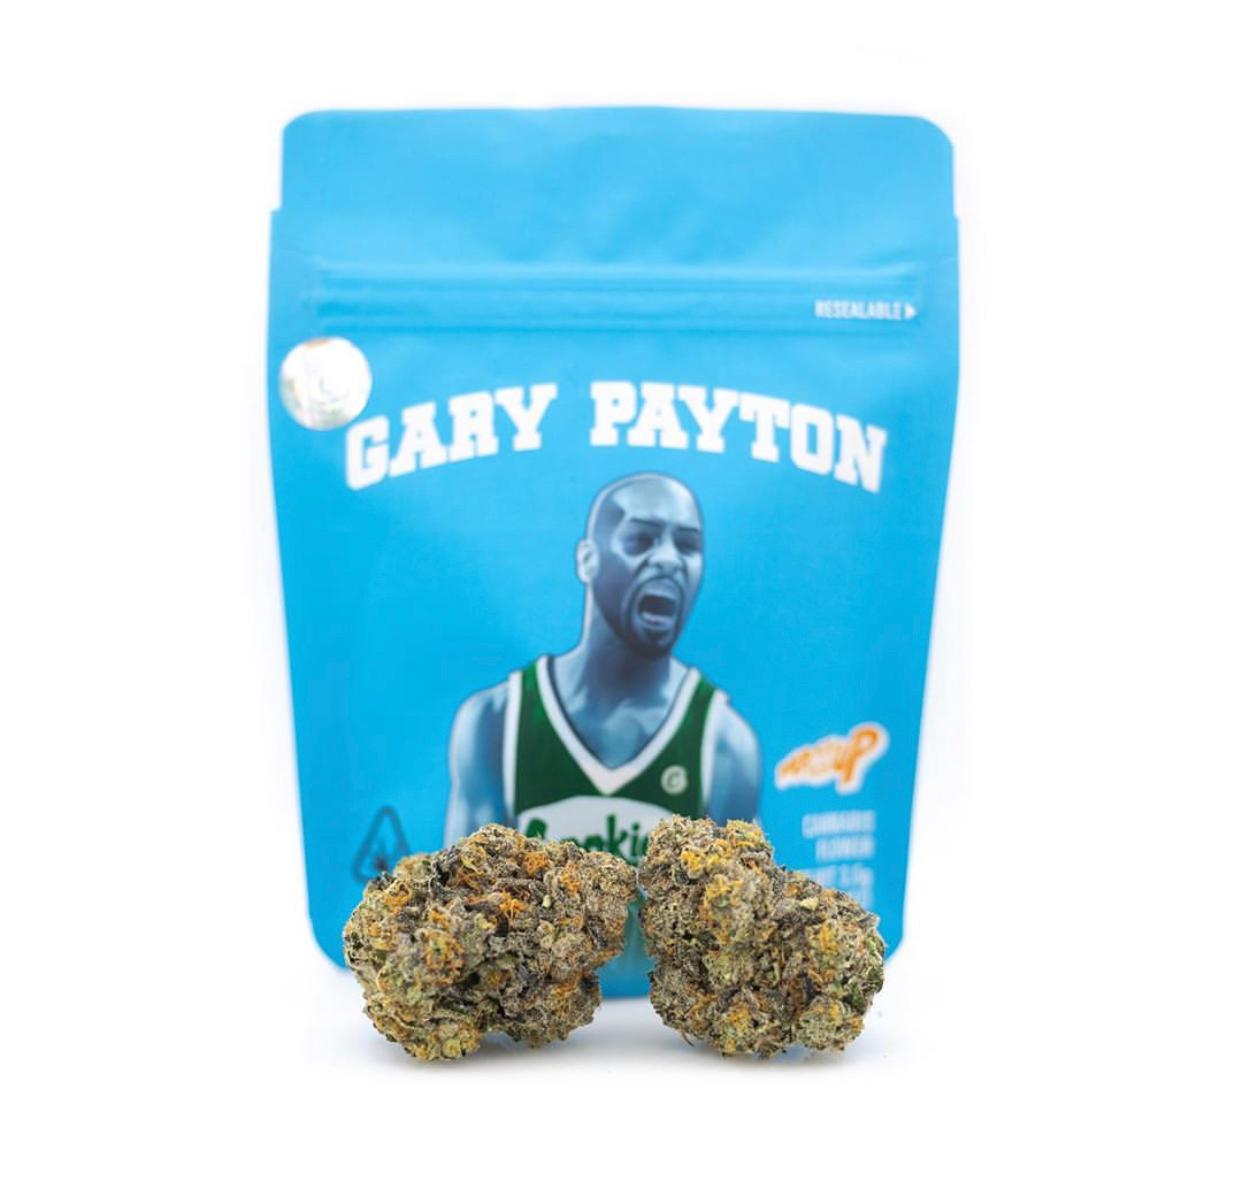 Buy Gary Payton Cookies Online